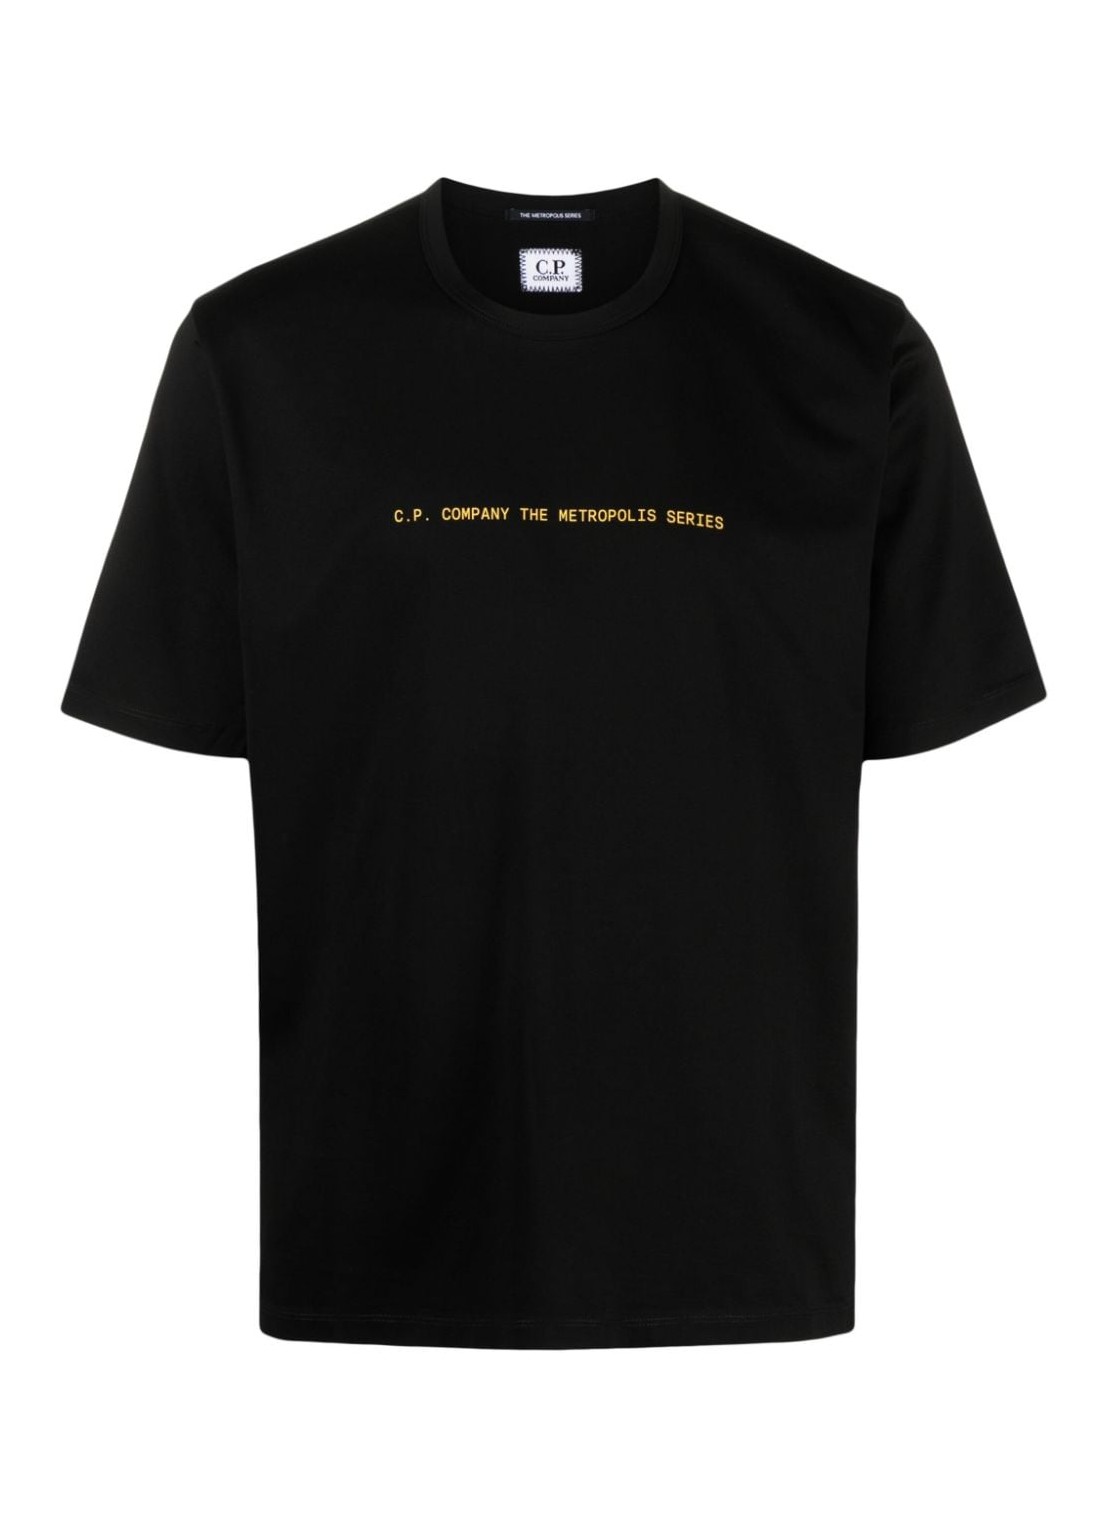 Camiseta c.p.company t-shirt man metropolis series mercerized jersey graphic badge t-shirt 16clts047